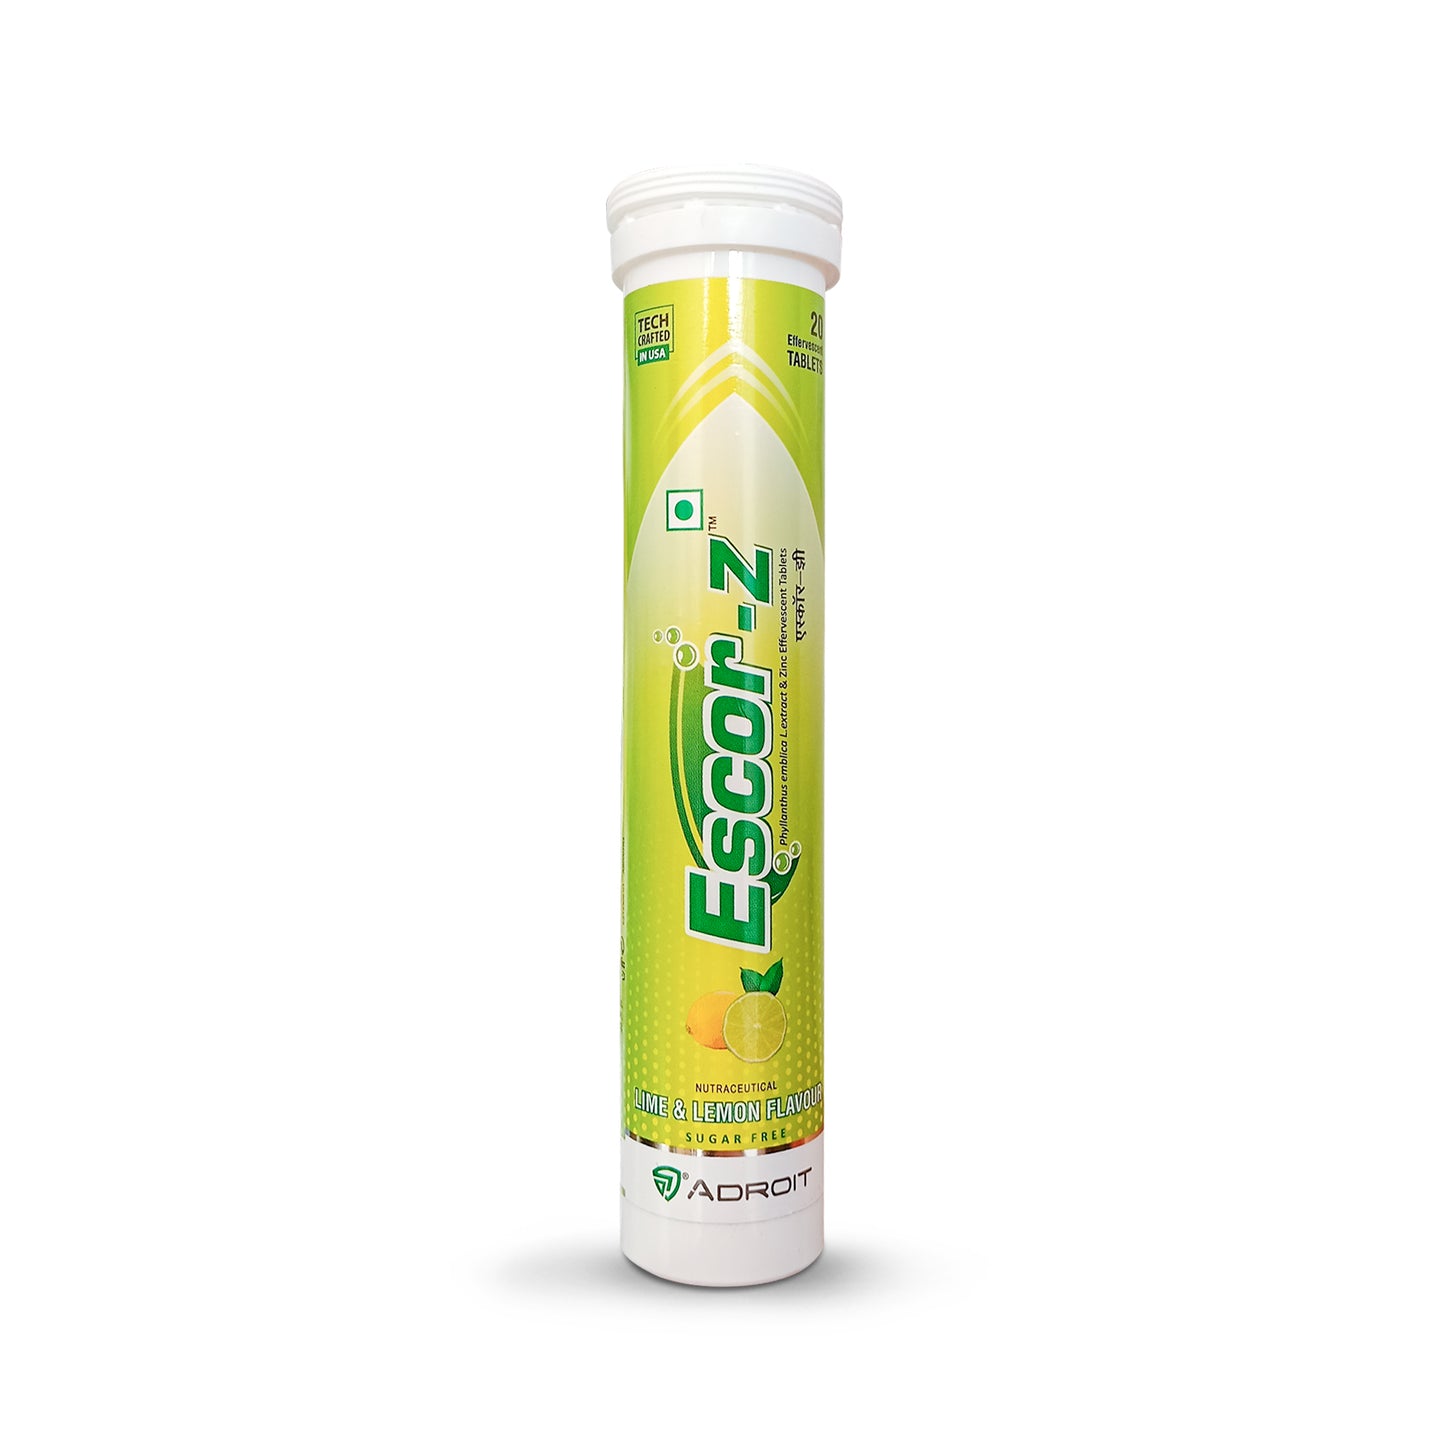 Escor-Z Effervescent Tablets Lime and Lemon Flavour Pack of 3